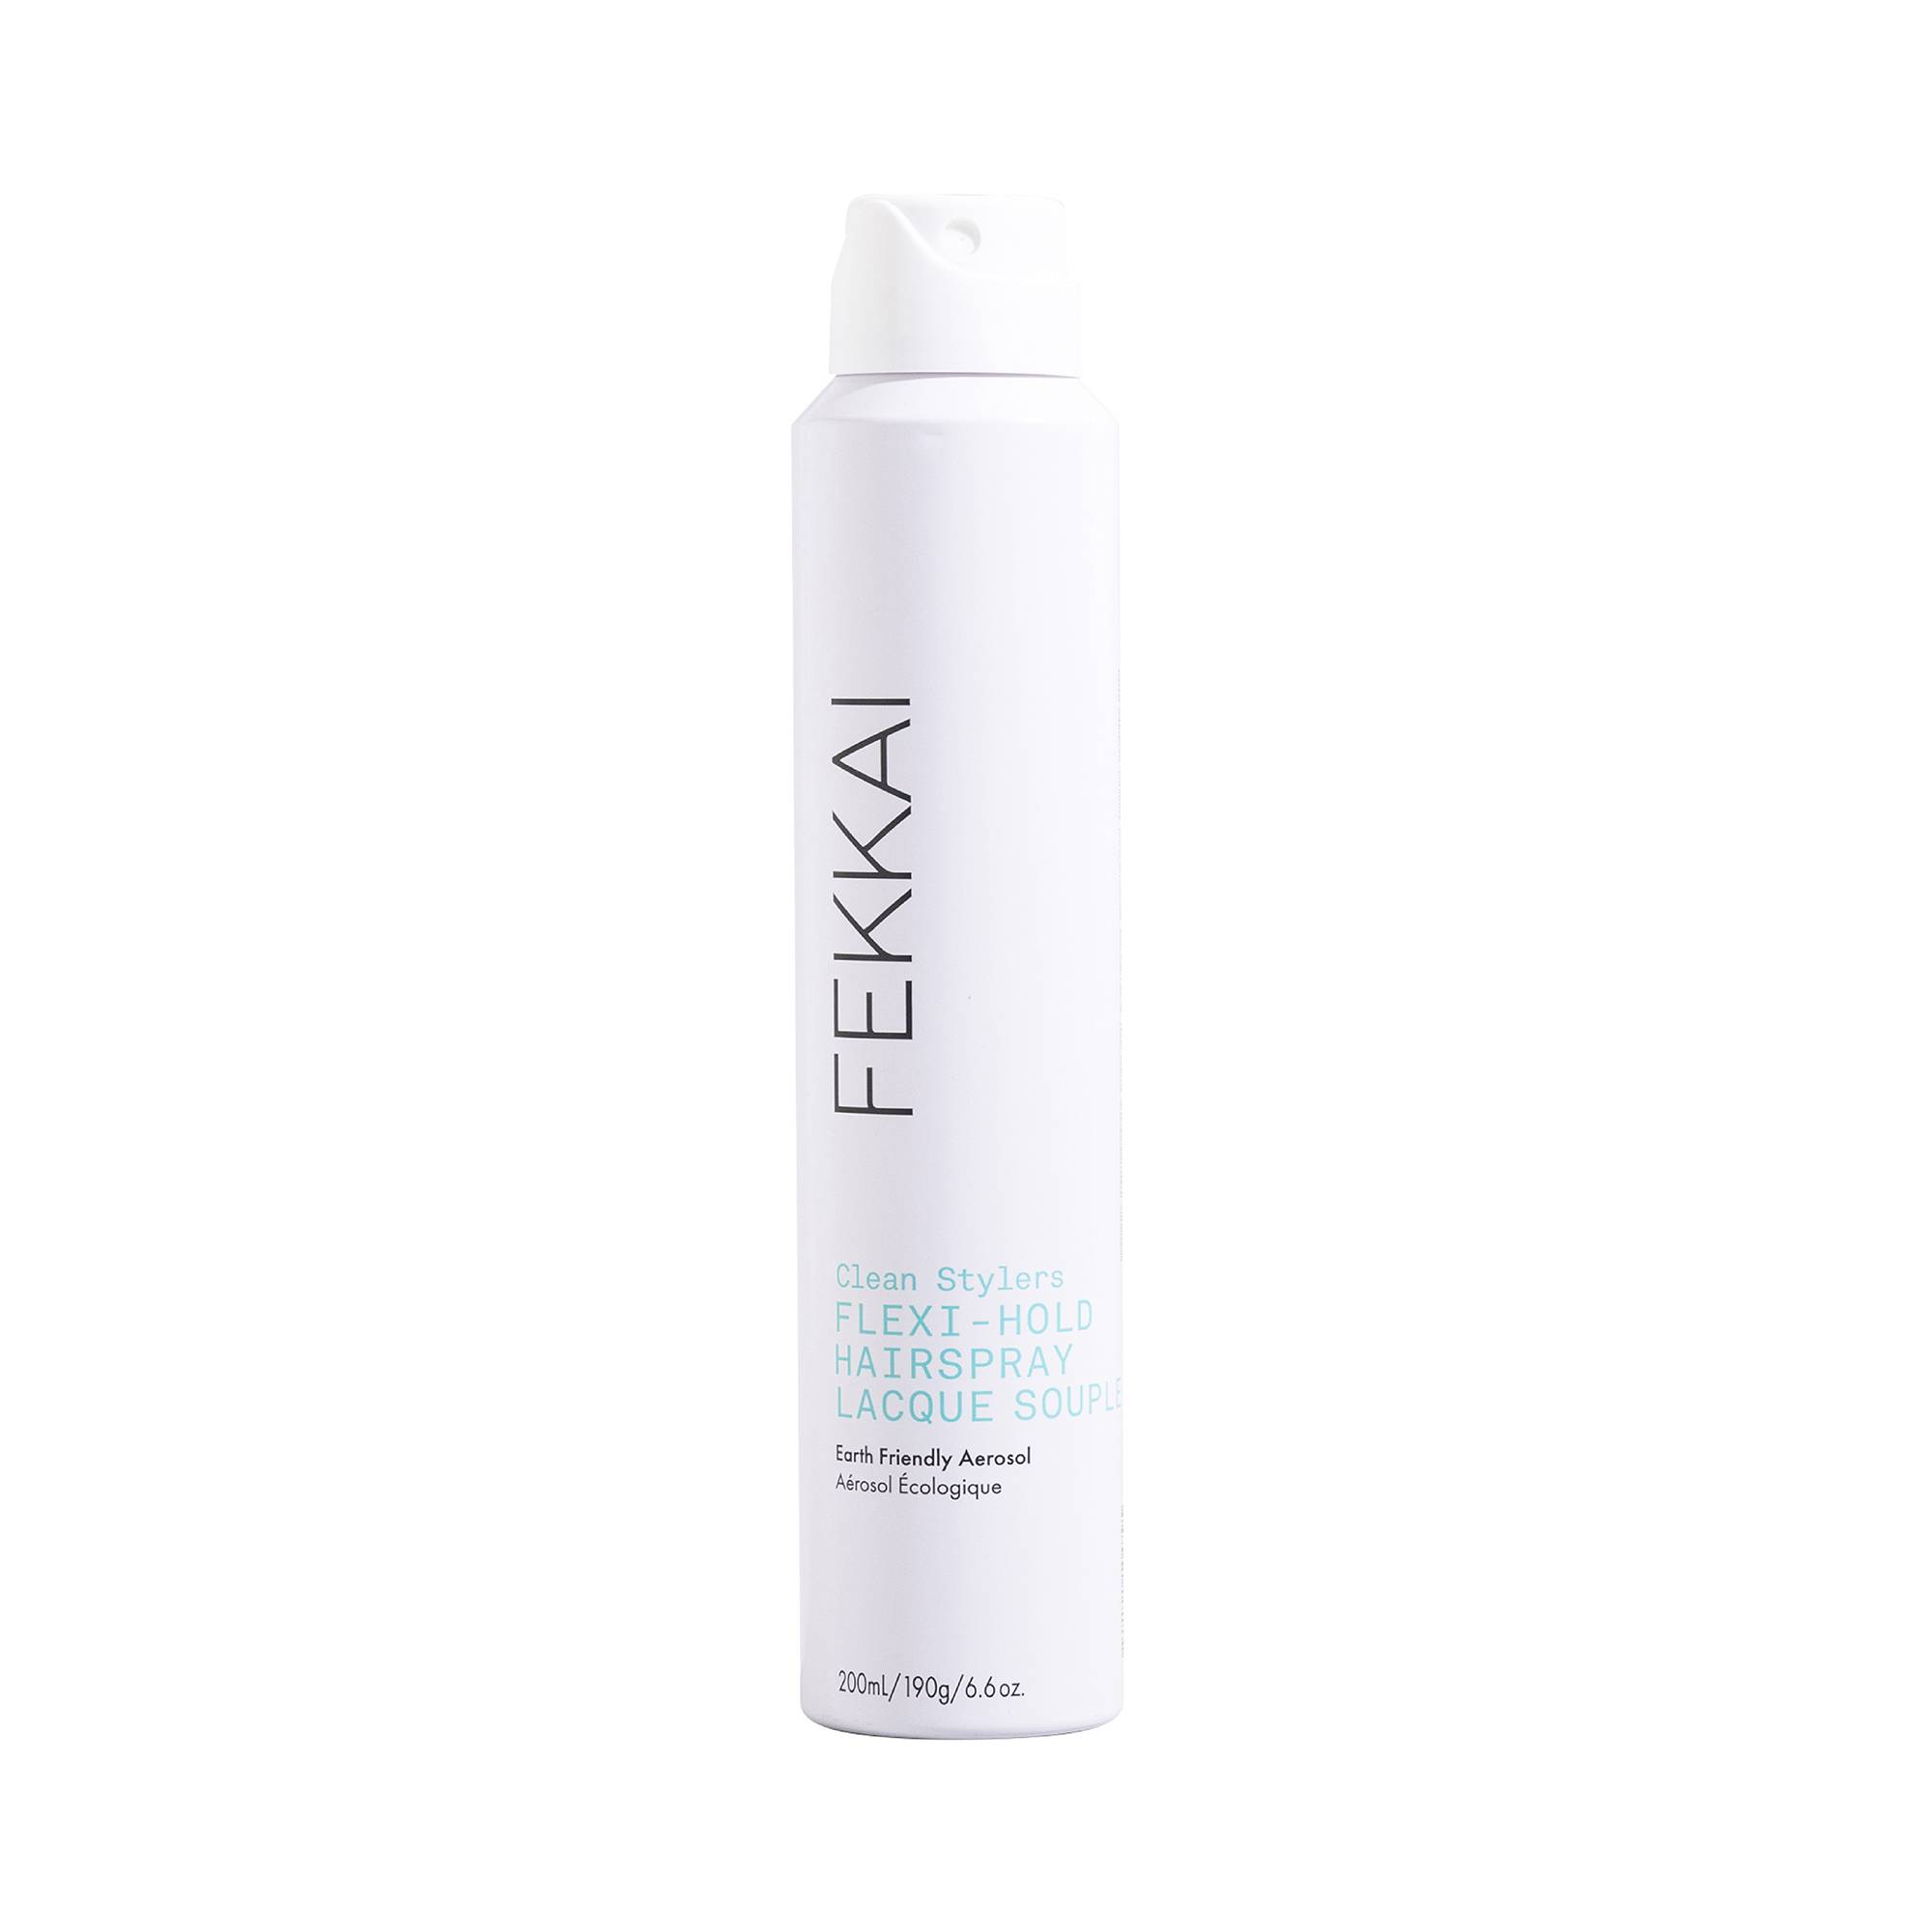 Laque souple Flexi-Hold Hairspray Clean Stylers de la marque Fekkai Contenance 200ml - 1